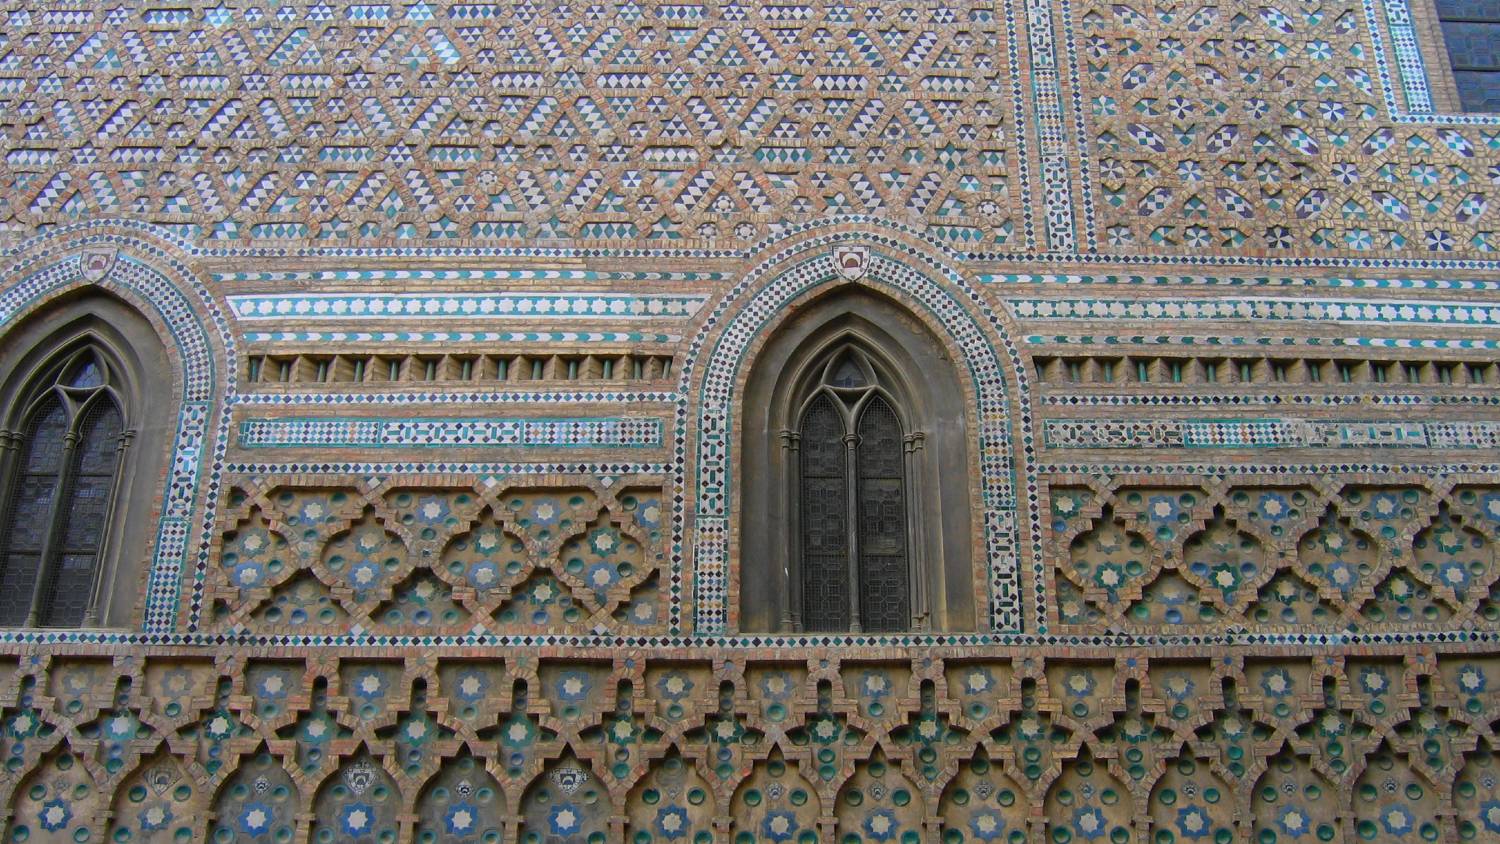 Mur mudéjar de la cathédrale Saint-Sauveur de Saragosse, en Espagne (Wikipedia)